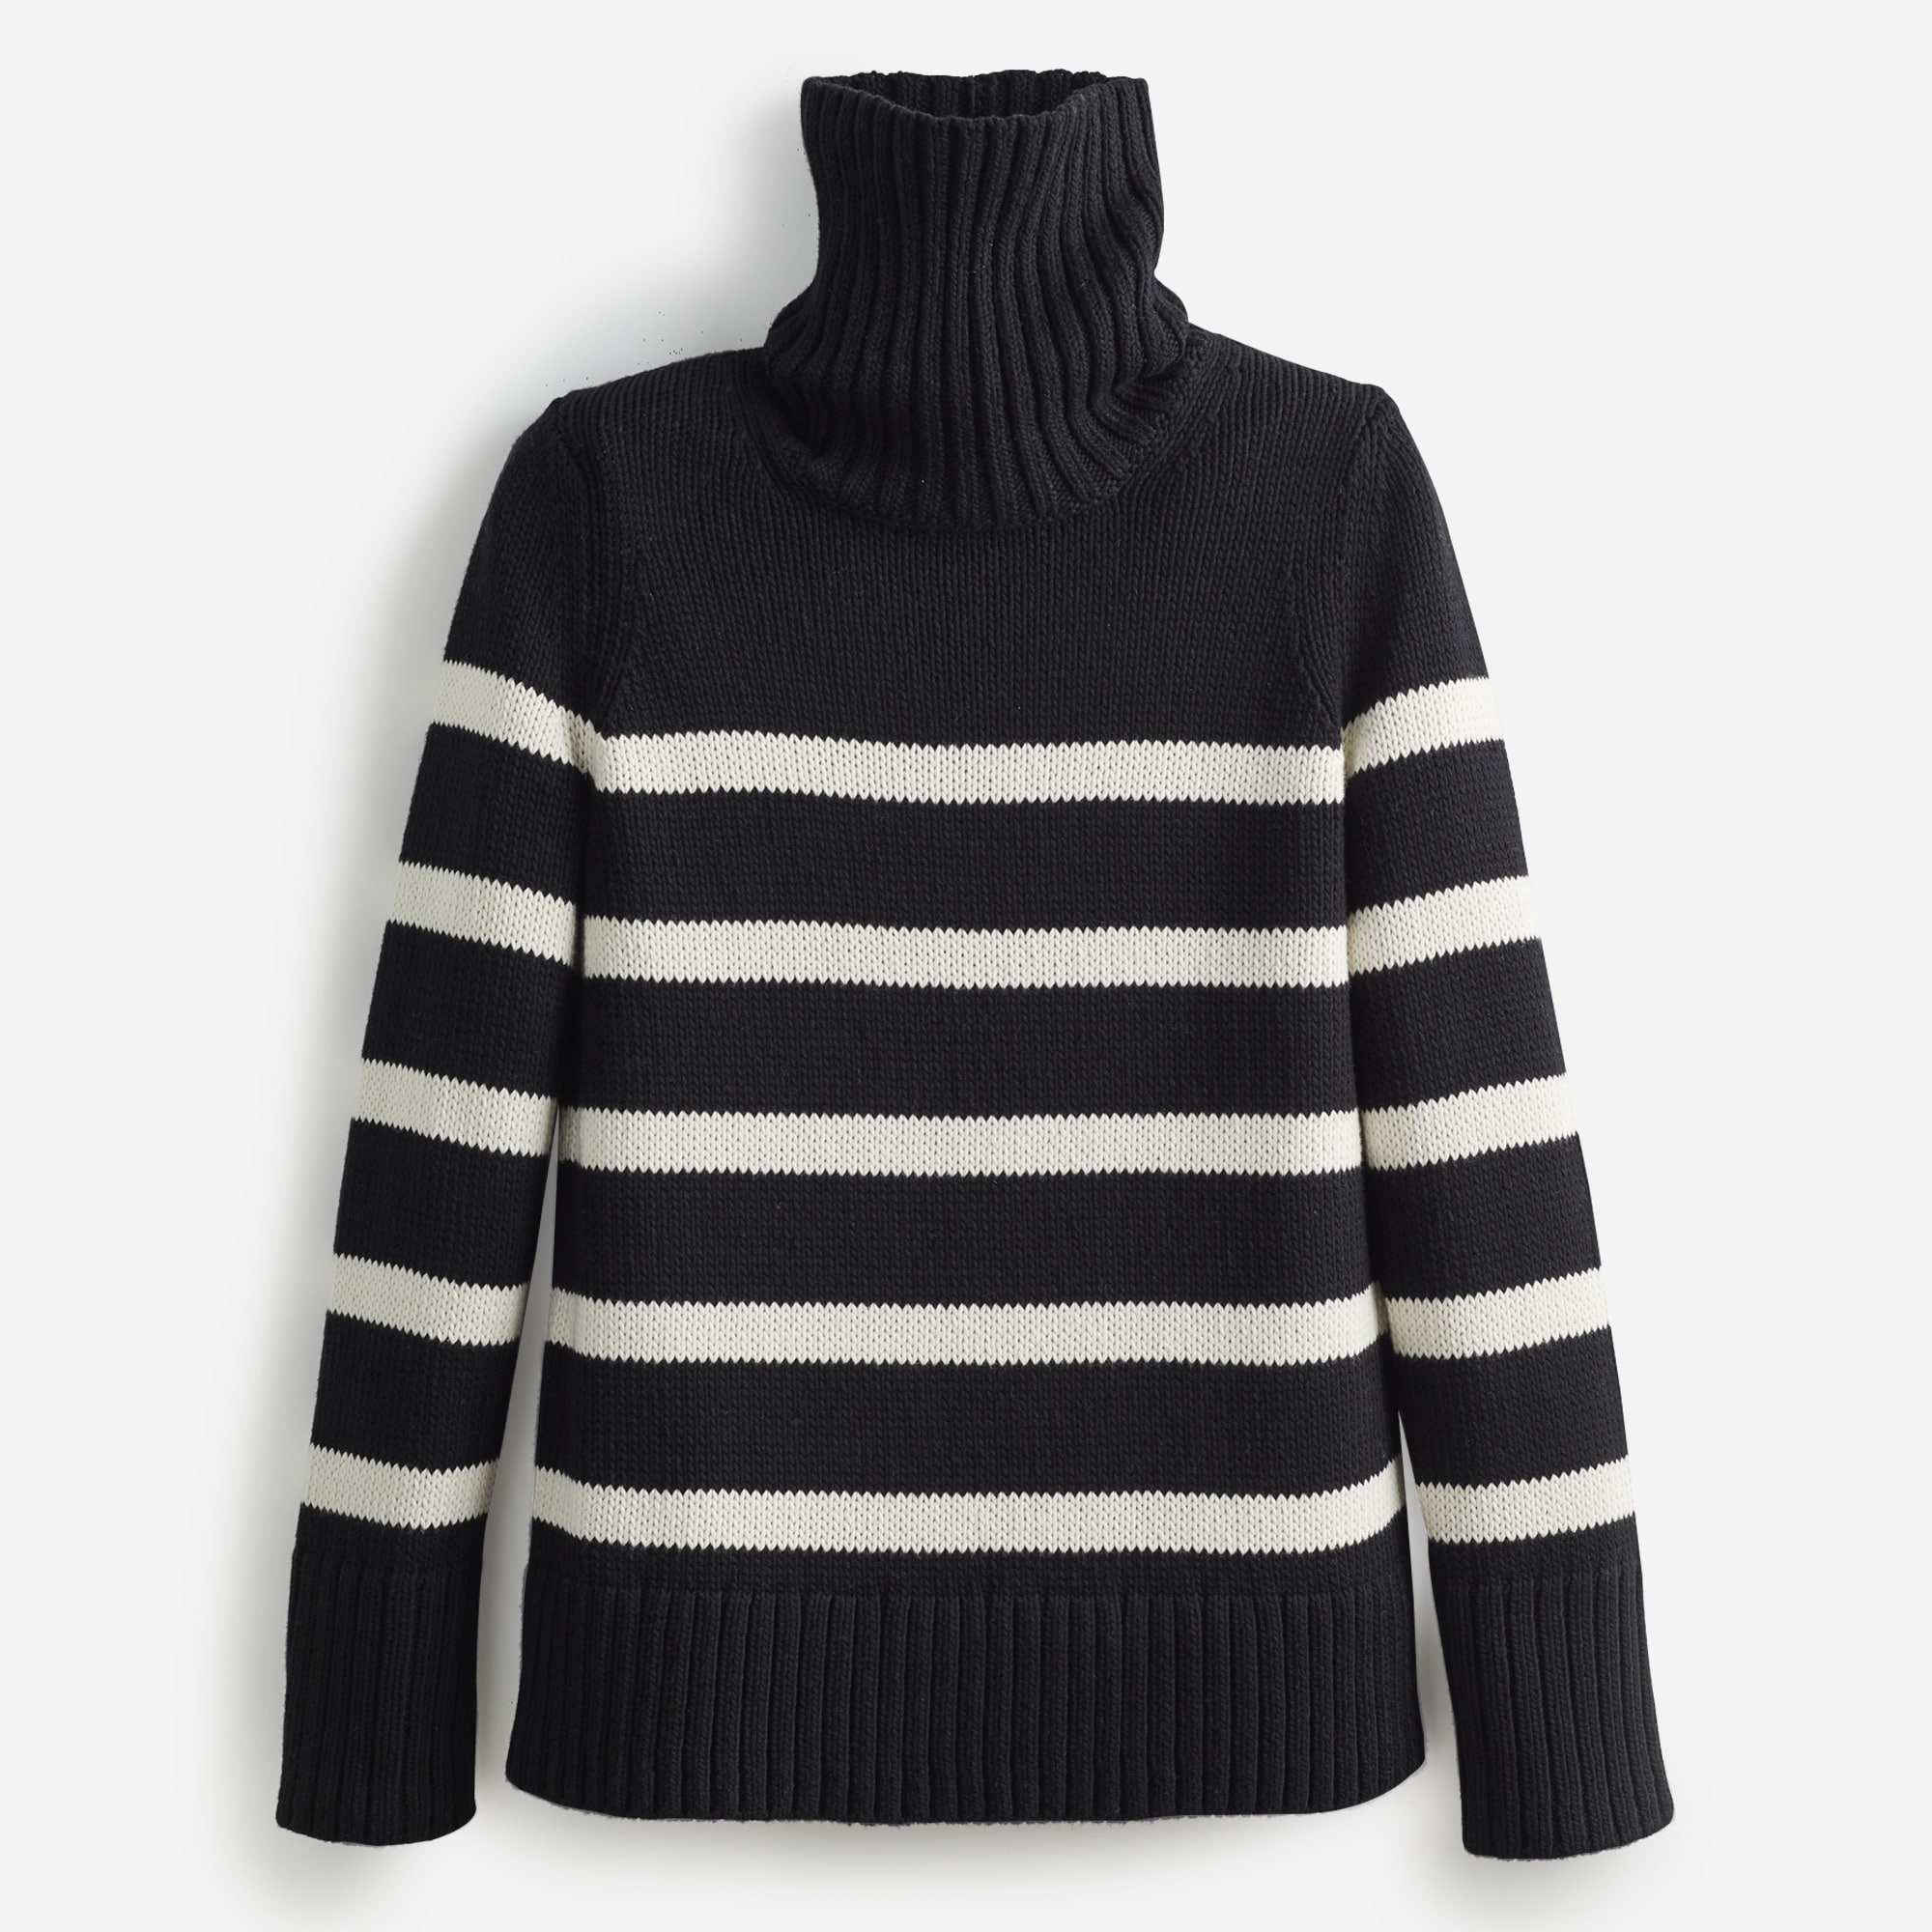  State of Cotton NYC Wynn striped sweater